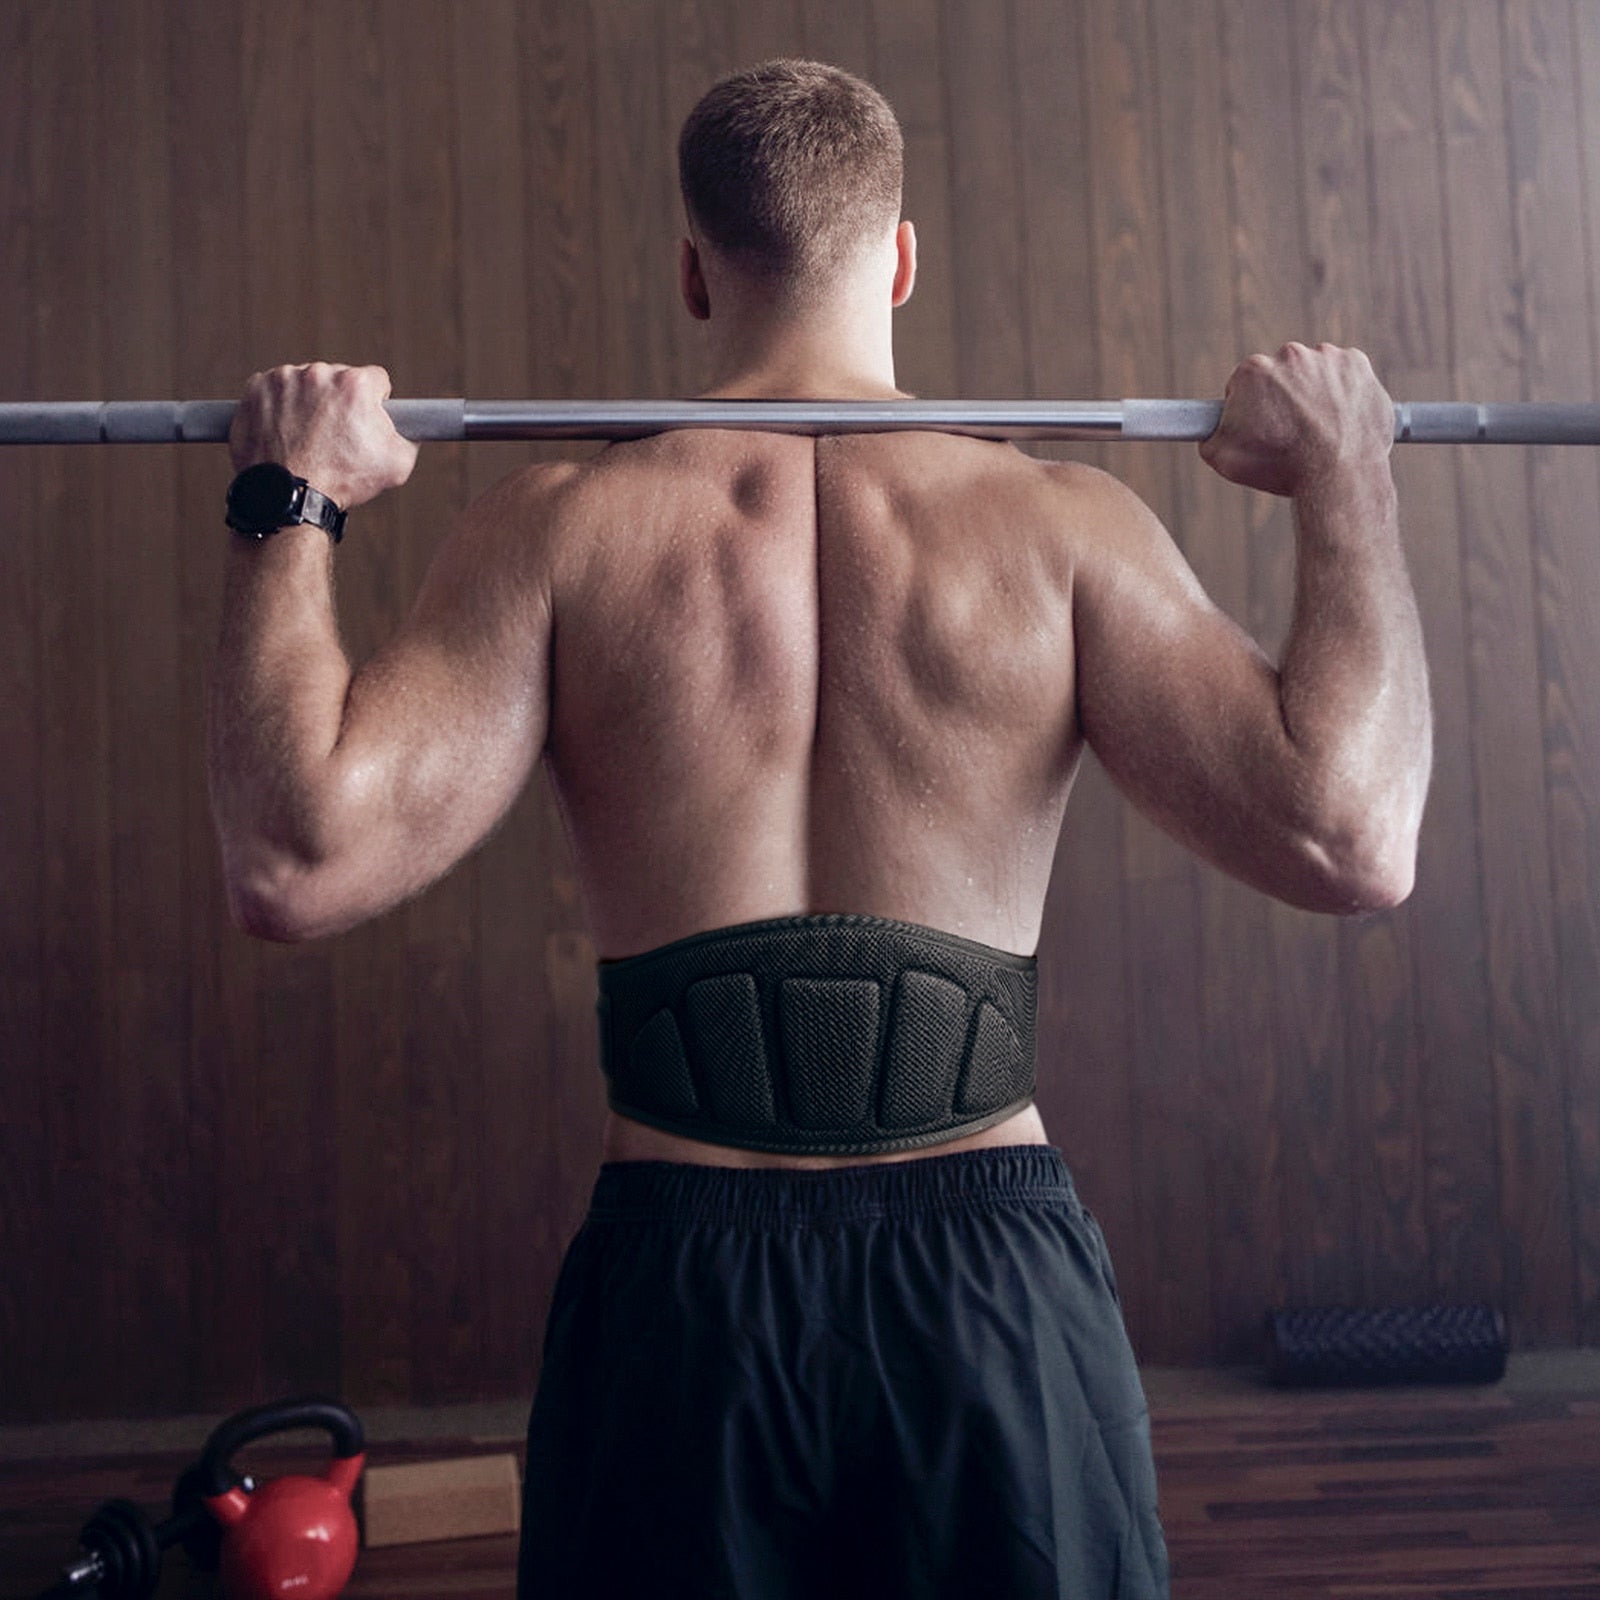 SKDK Weightlifting Belt Back Support Belt Men Waist Protection Fitness Training Orthopedics Protection Spine Back Support Belt